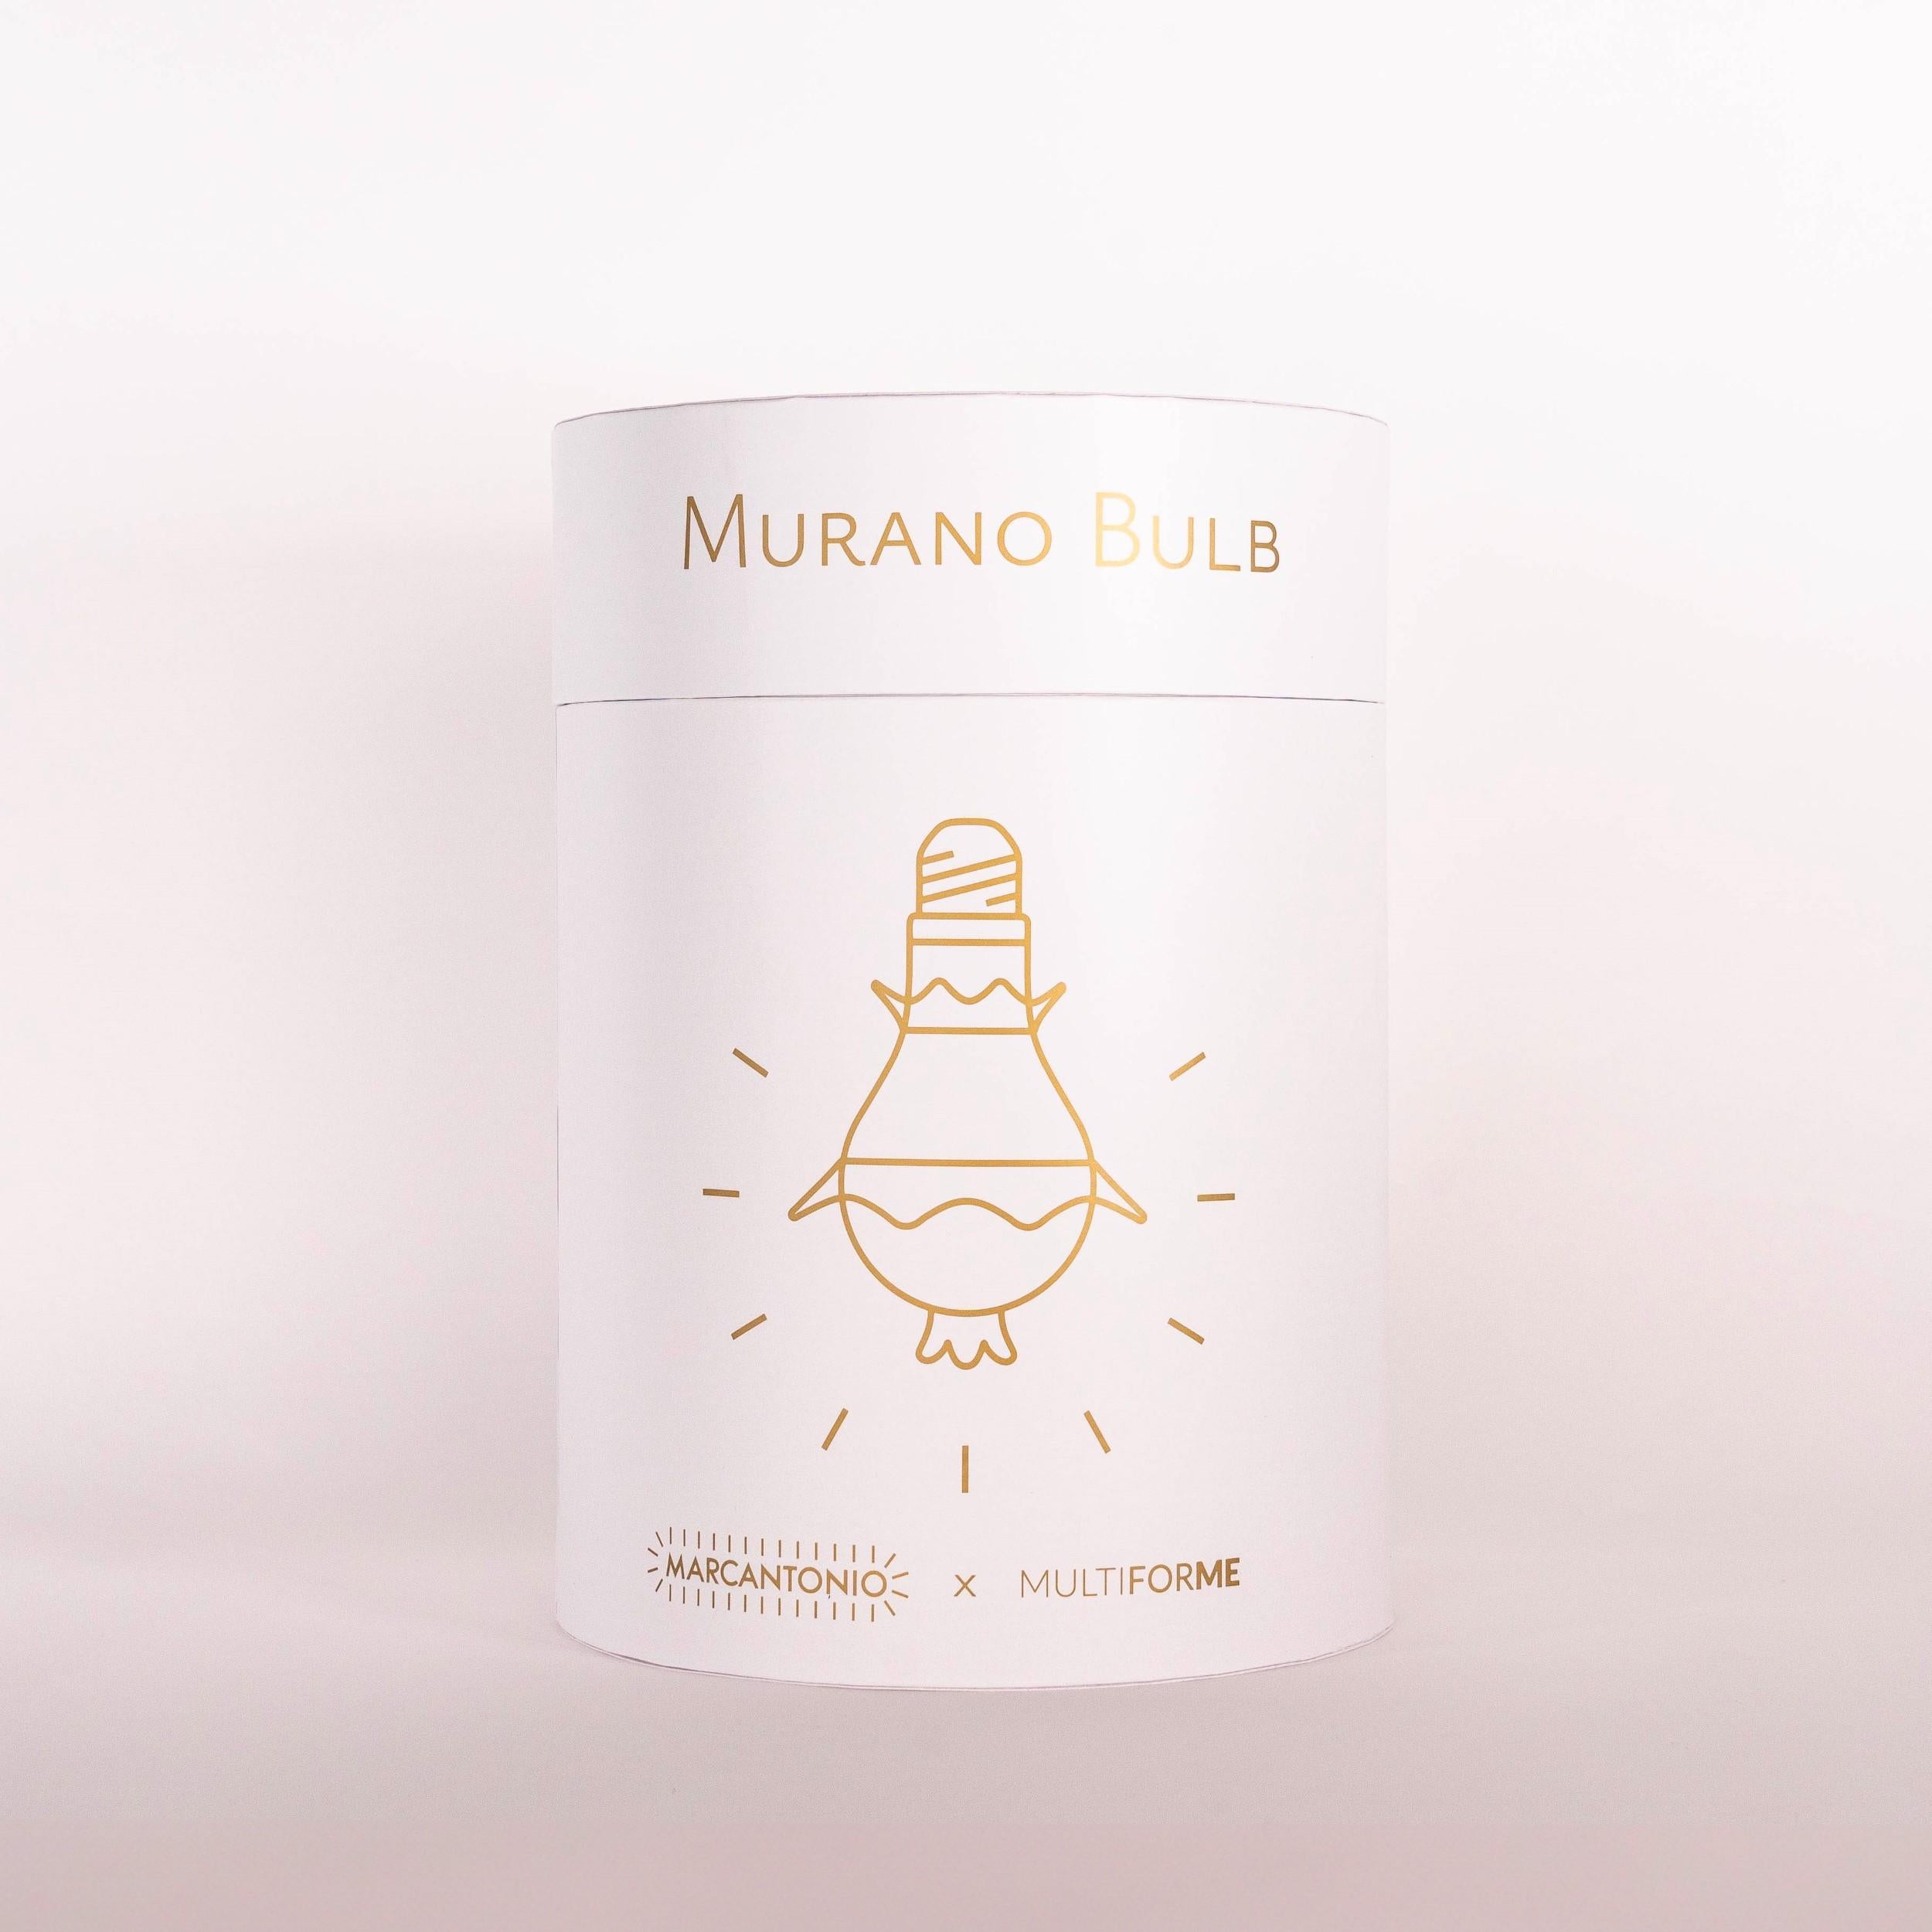 Artistic glass lightbulb chandelier Murano Bulb Marcantonio X Multiforme #10 For Sale 4